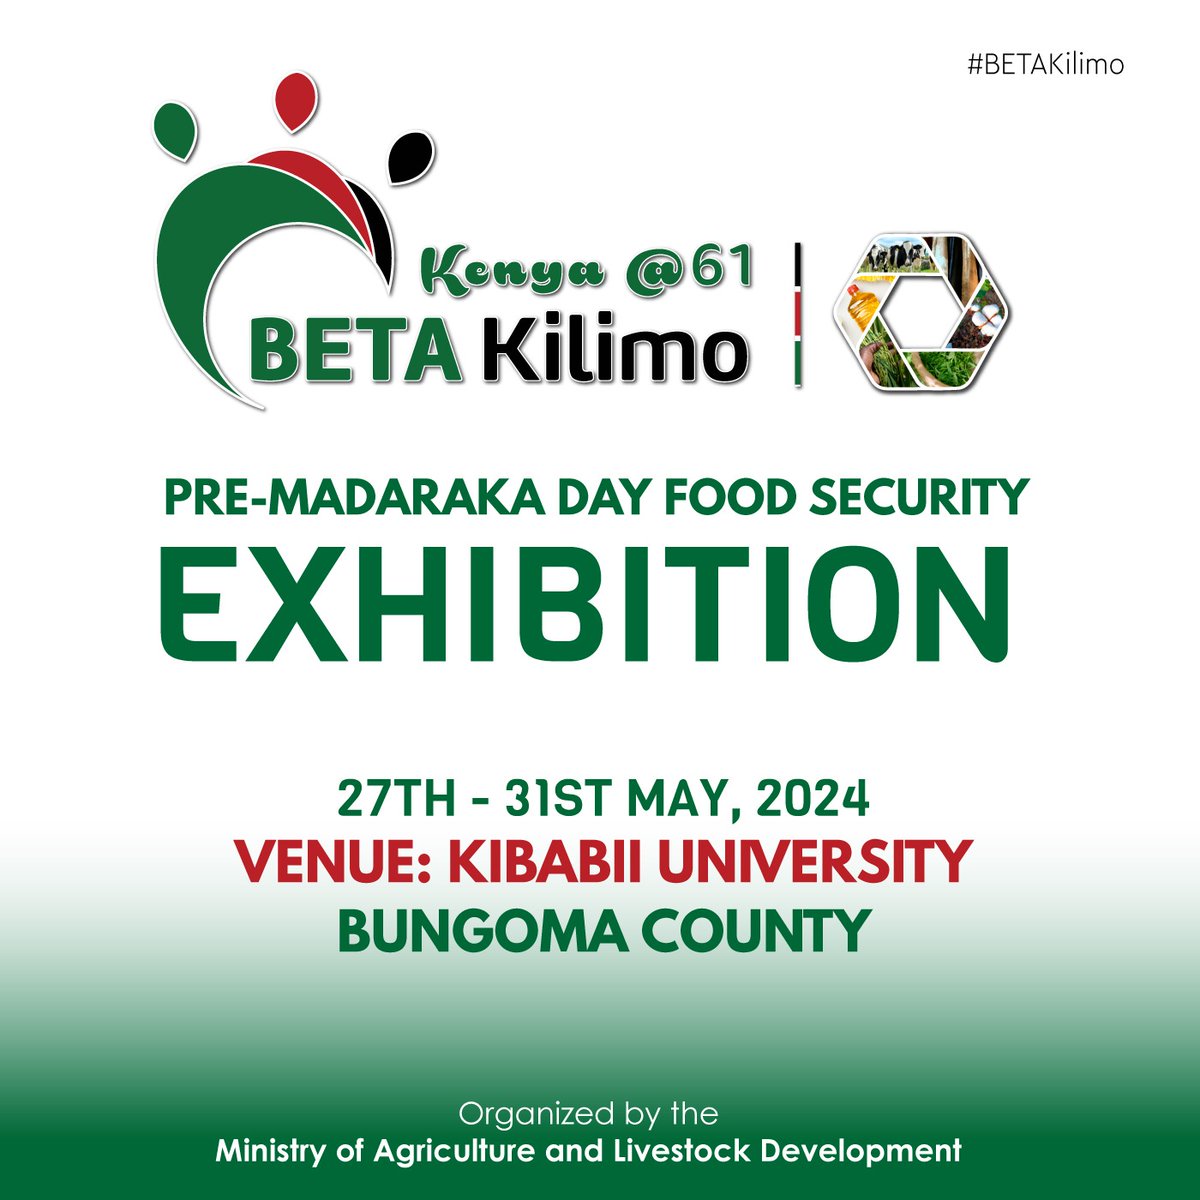 BETA Kilimo Pre-Madaraka Day Food Security Exhibition is underway in Bungoma County. #BETAKilimo